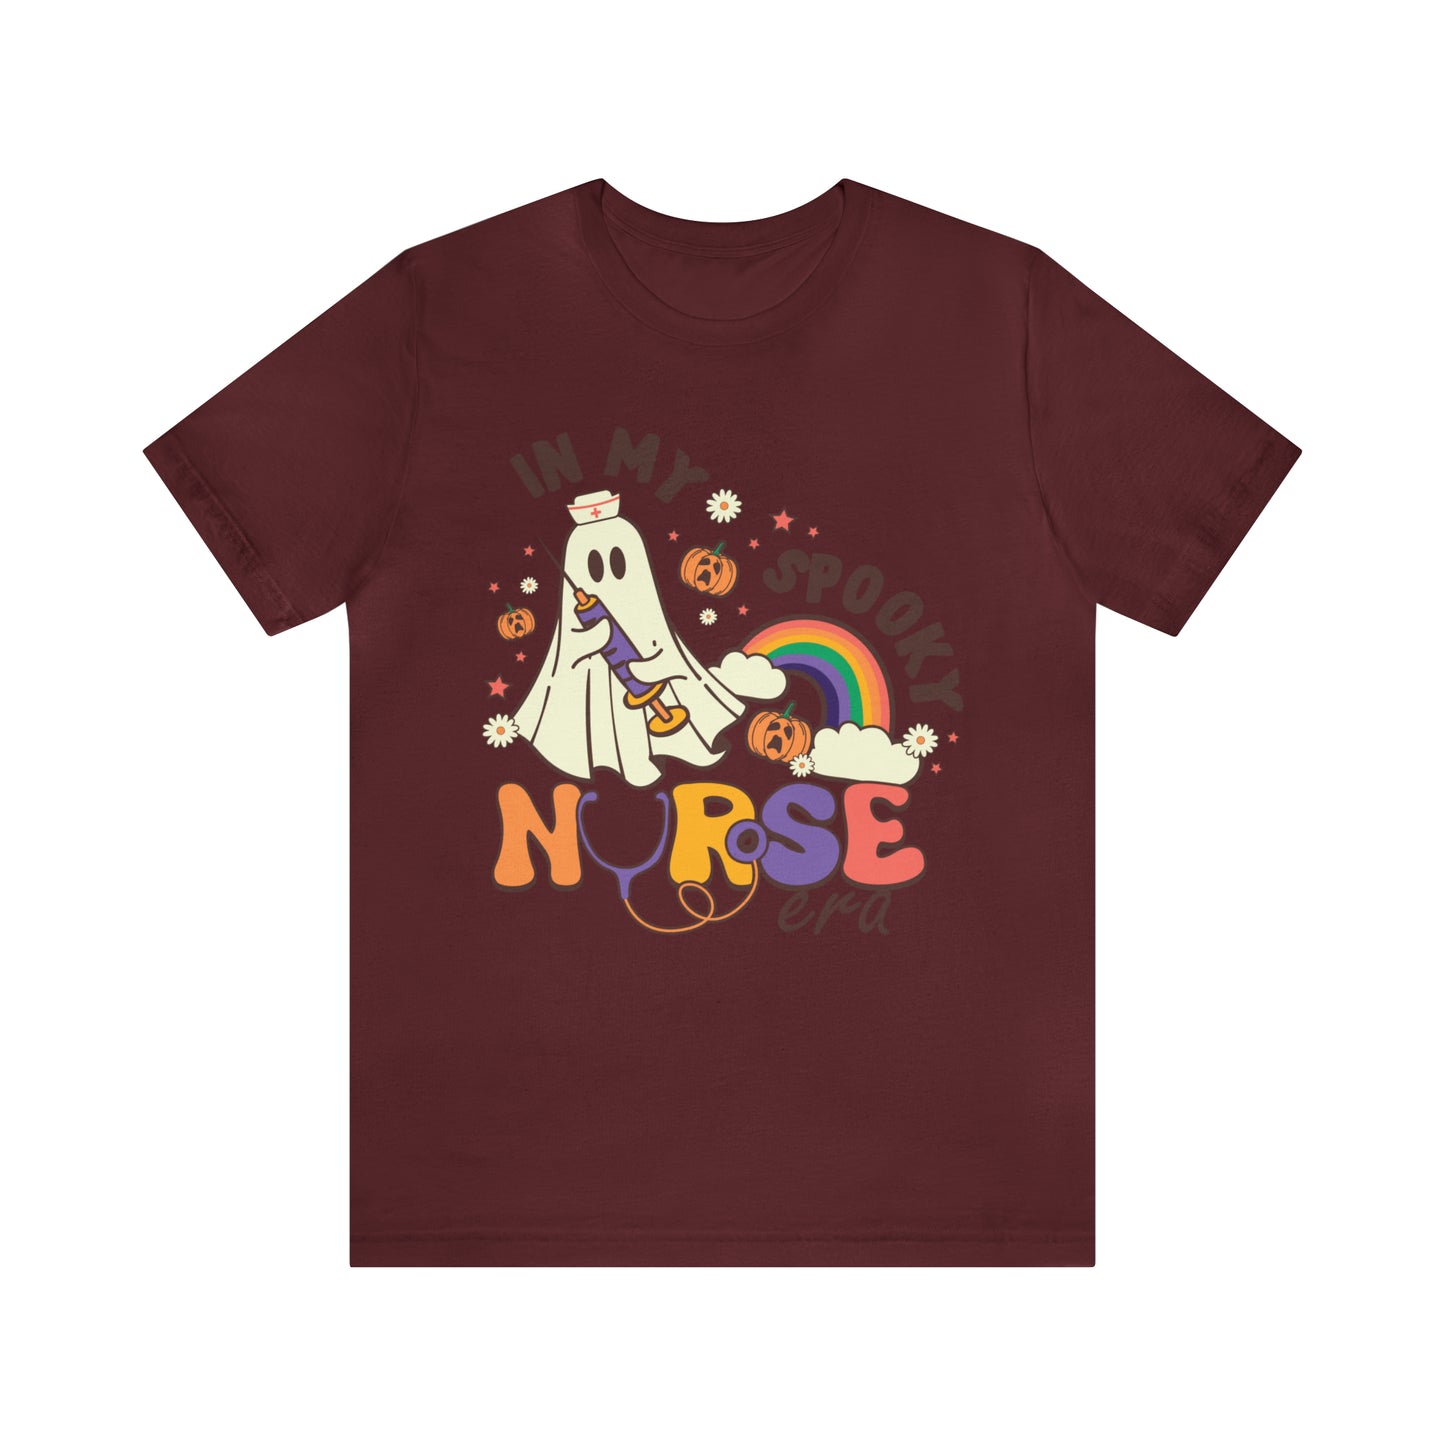 In My Spooky Nurse Era Shirt, Spooky NICU Nurse Shirt, Spooky Nurse Crew, Nurse Life Shirt, Spooky Nurse Shirt, Cute Halloween Shirt, T707